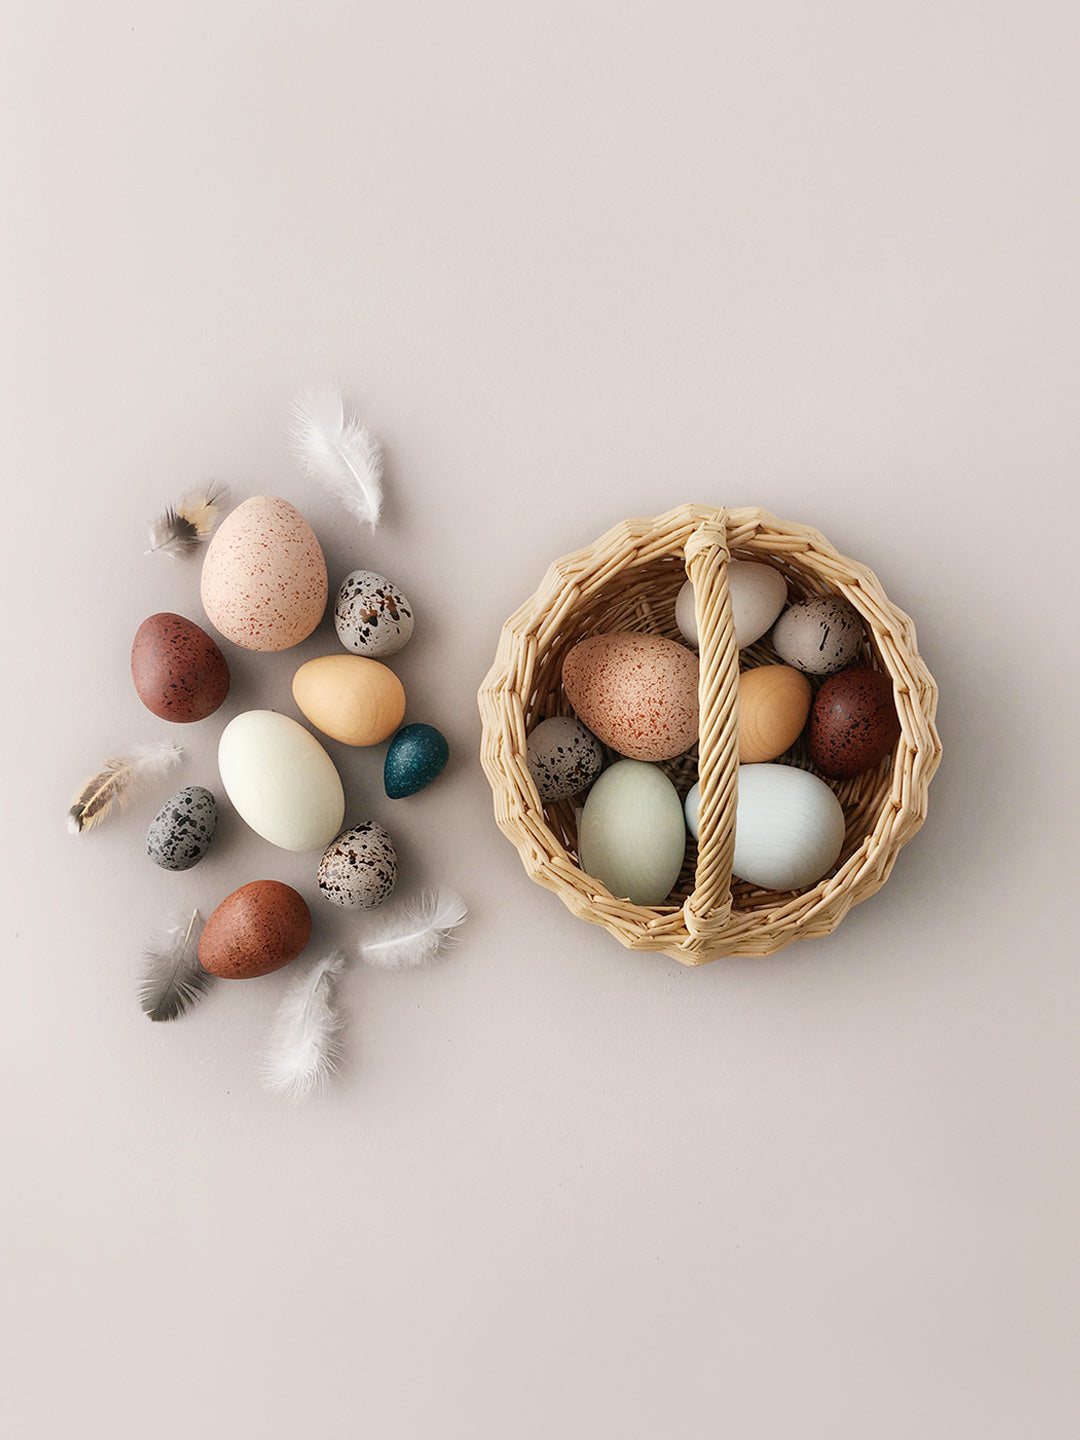 wooden eggs in their basket by moon picnic x erzi, oeufs de bois dans leur panier